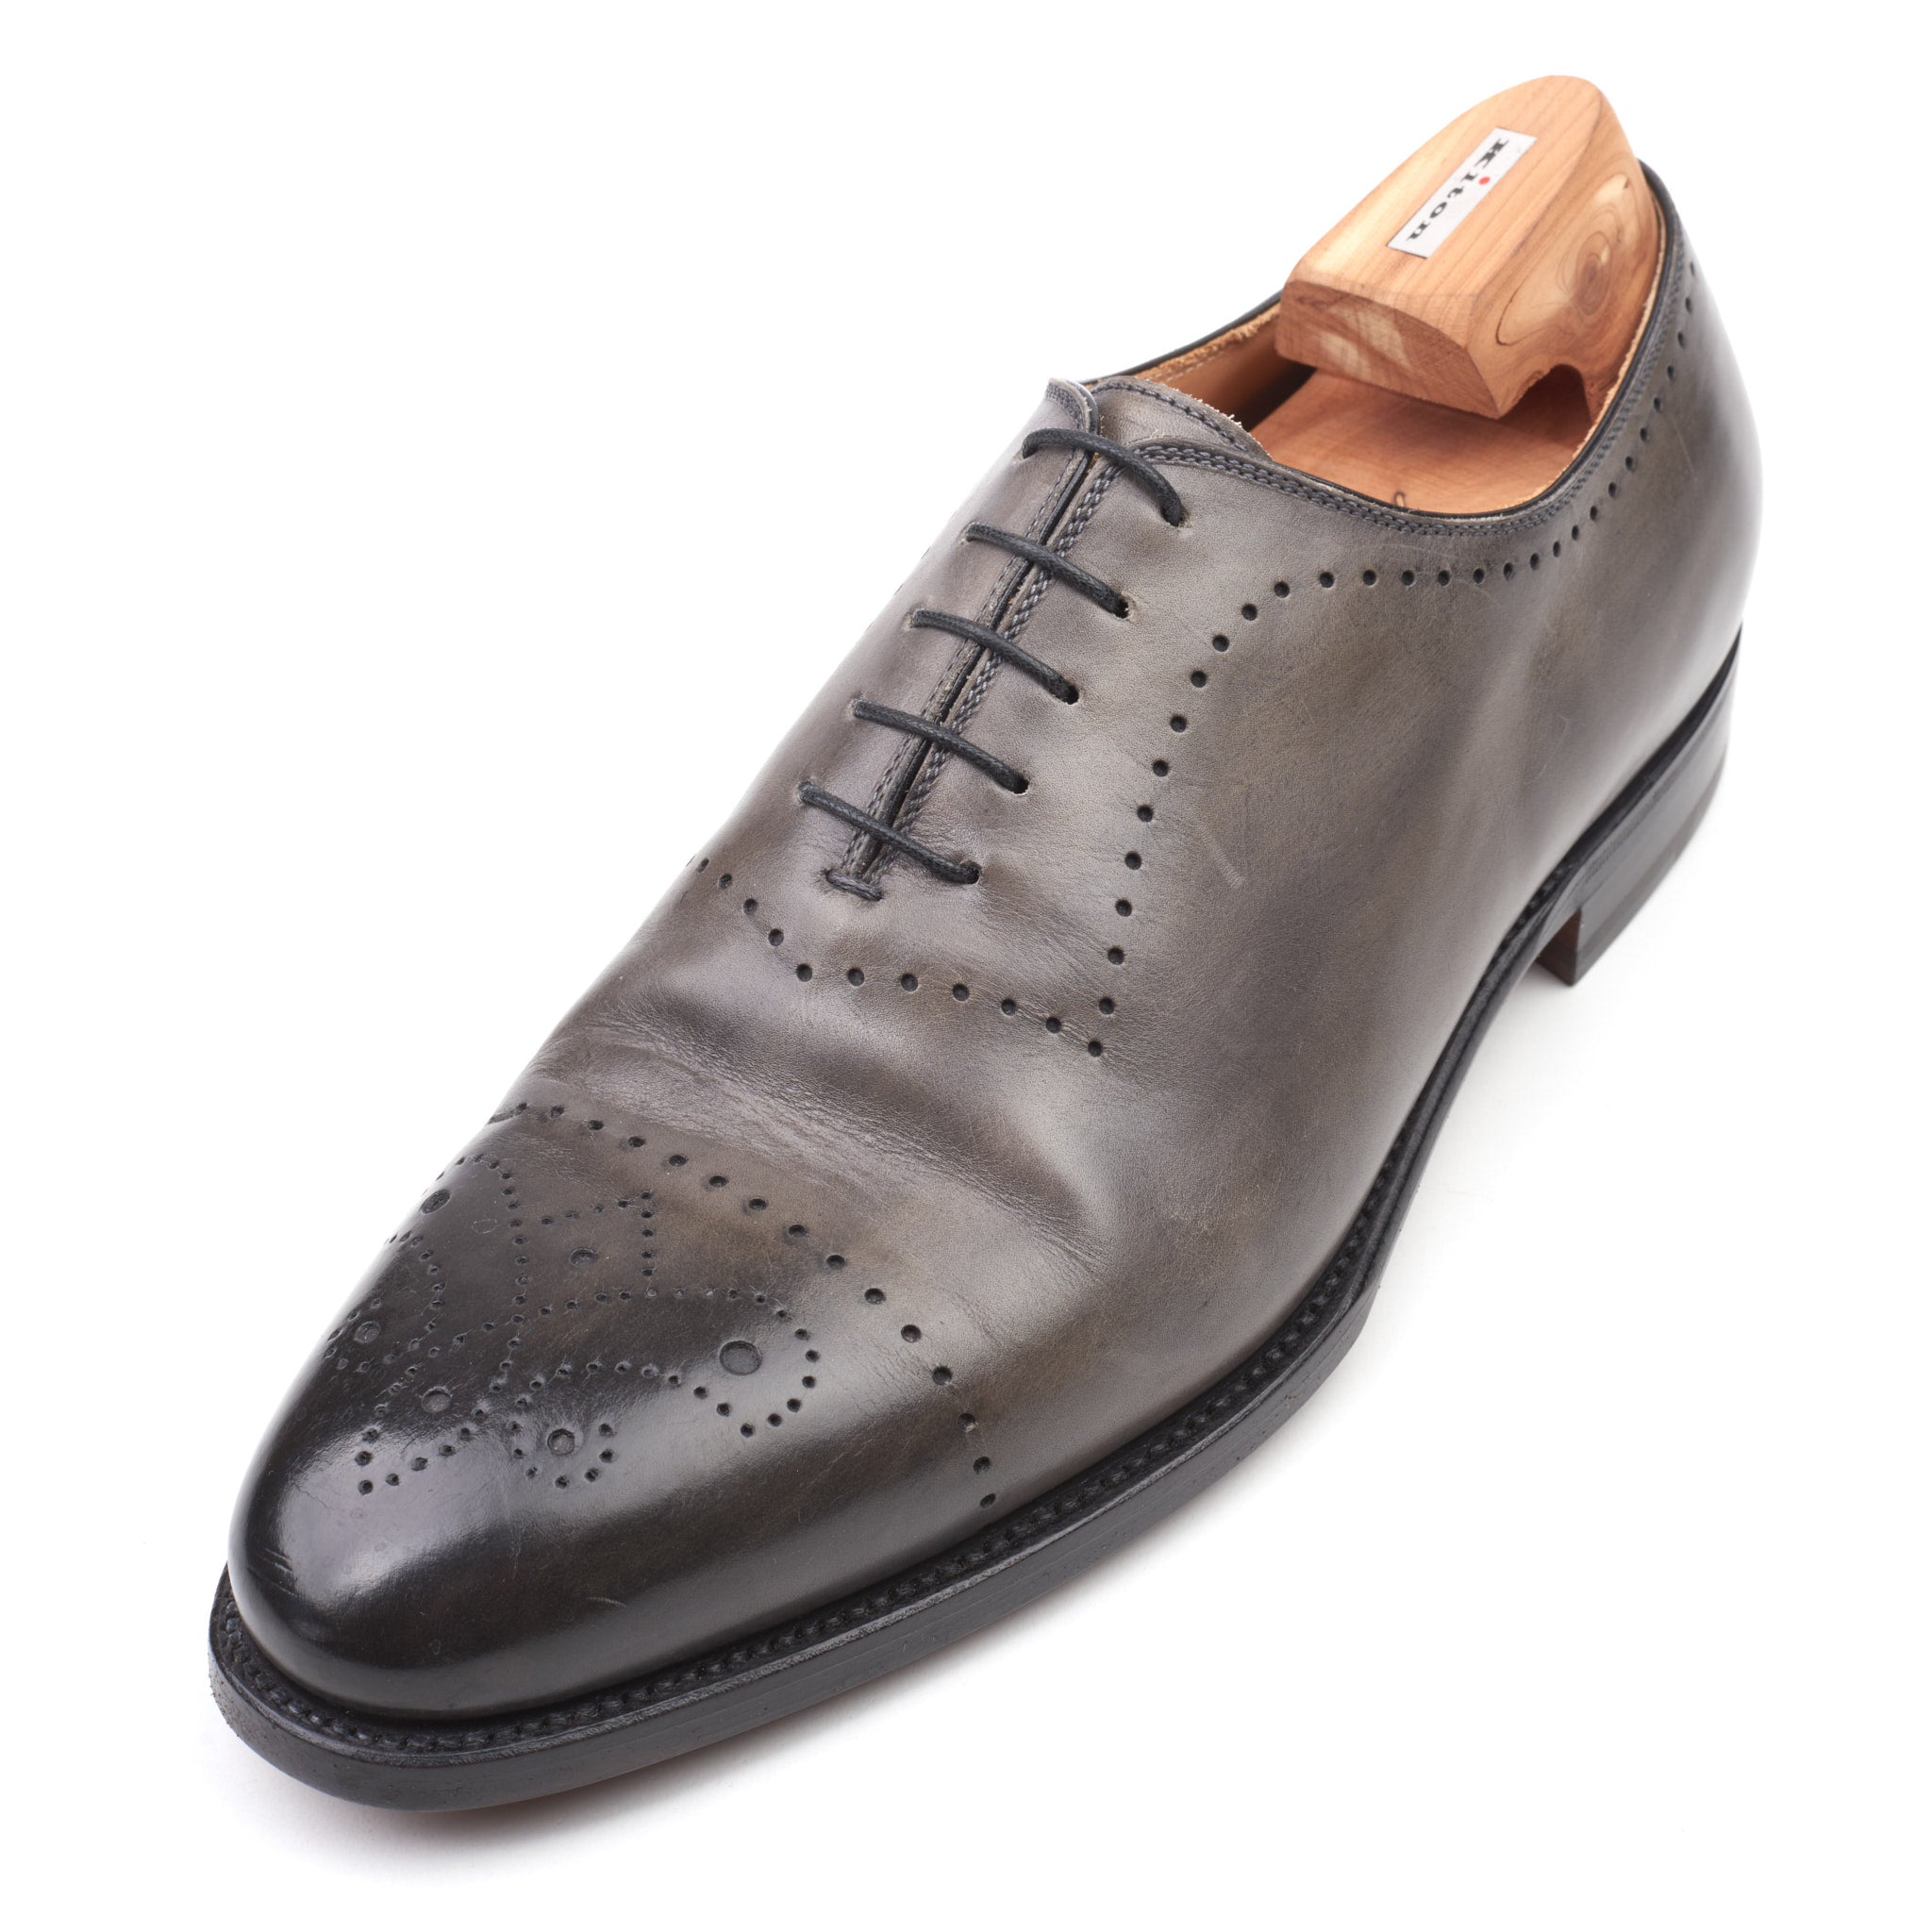 KITON Handmade Gray Calfskin Leather Wholecut Oxford Shoes US 9.5 NEW Box KITON